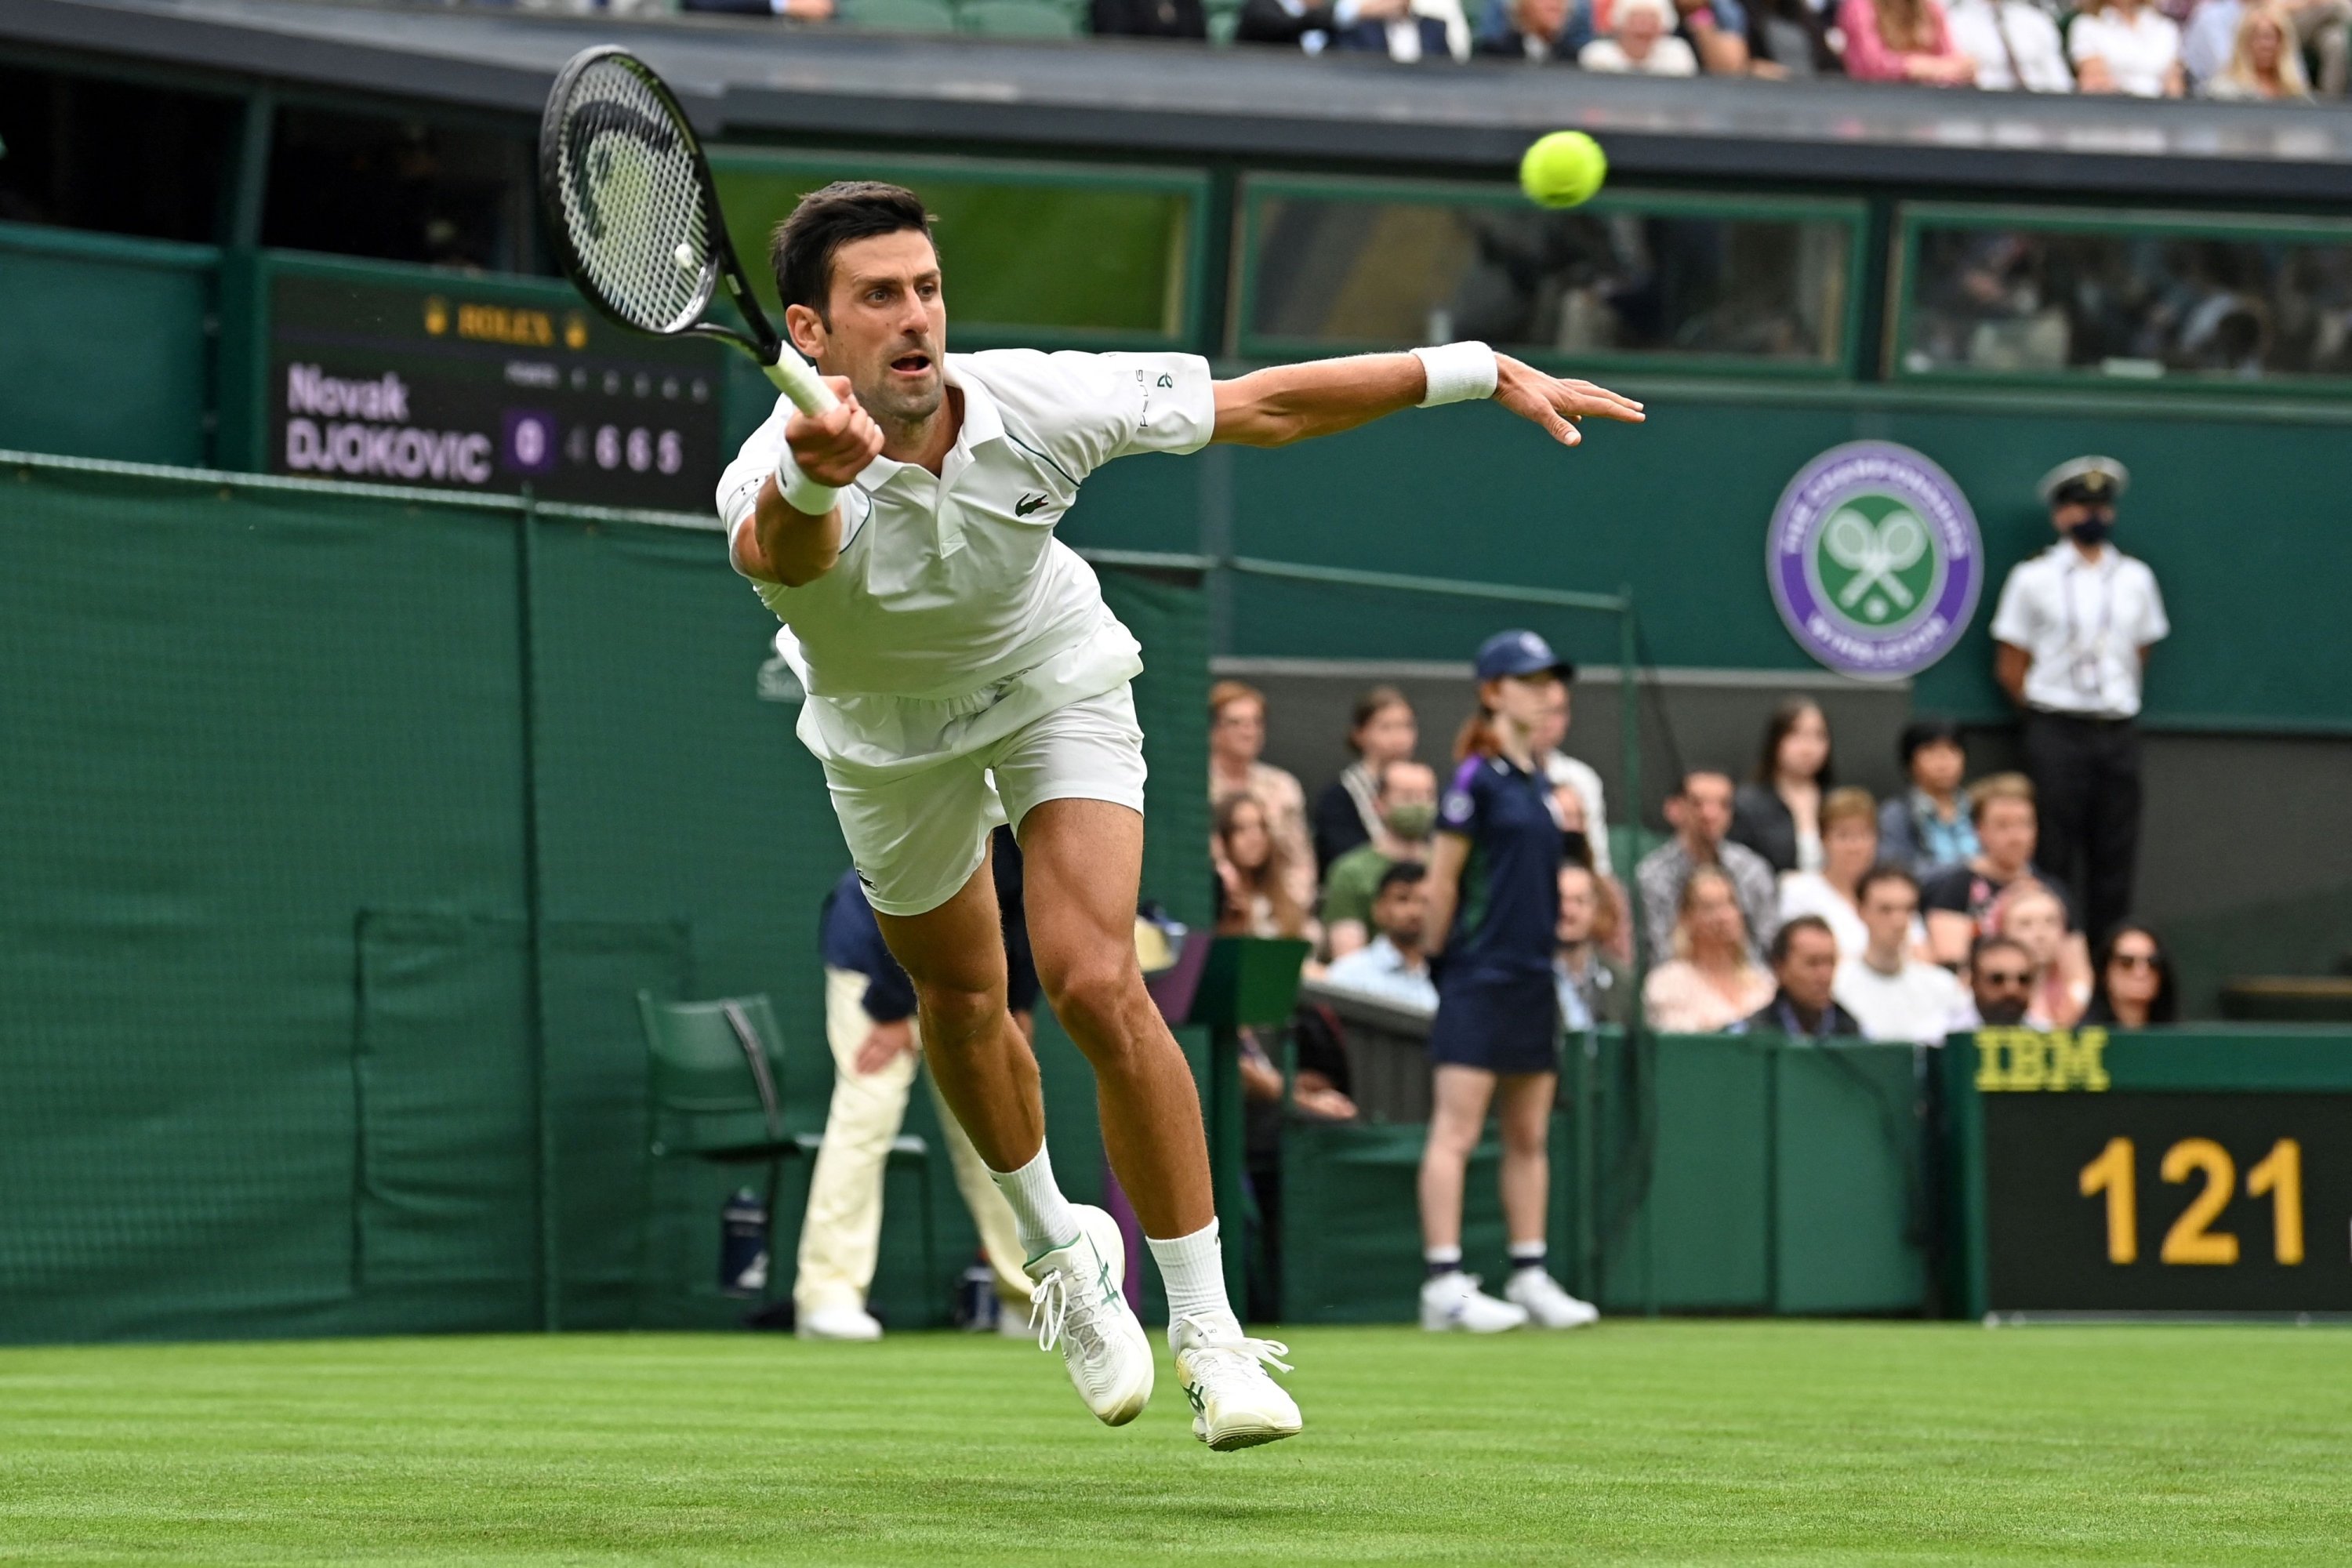 Wimbledon Tennis Championships - London Begins at 40